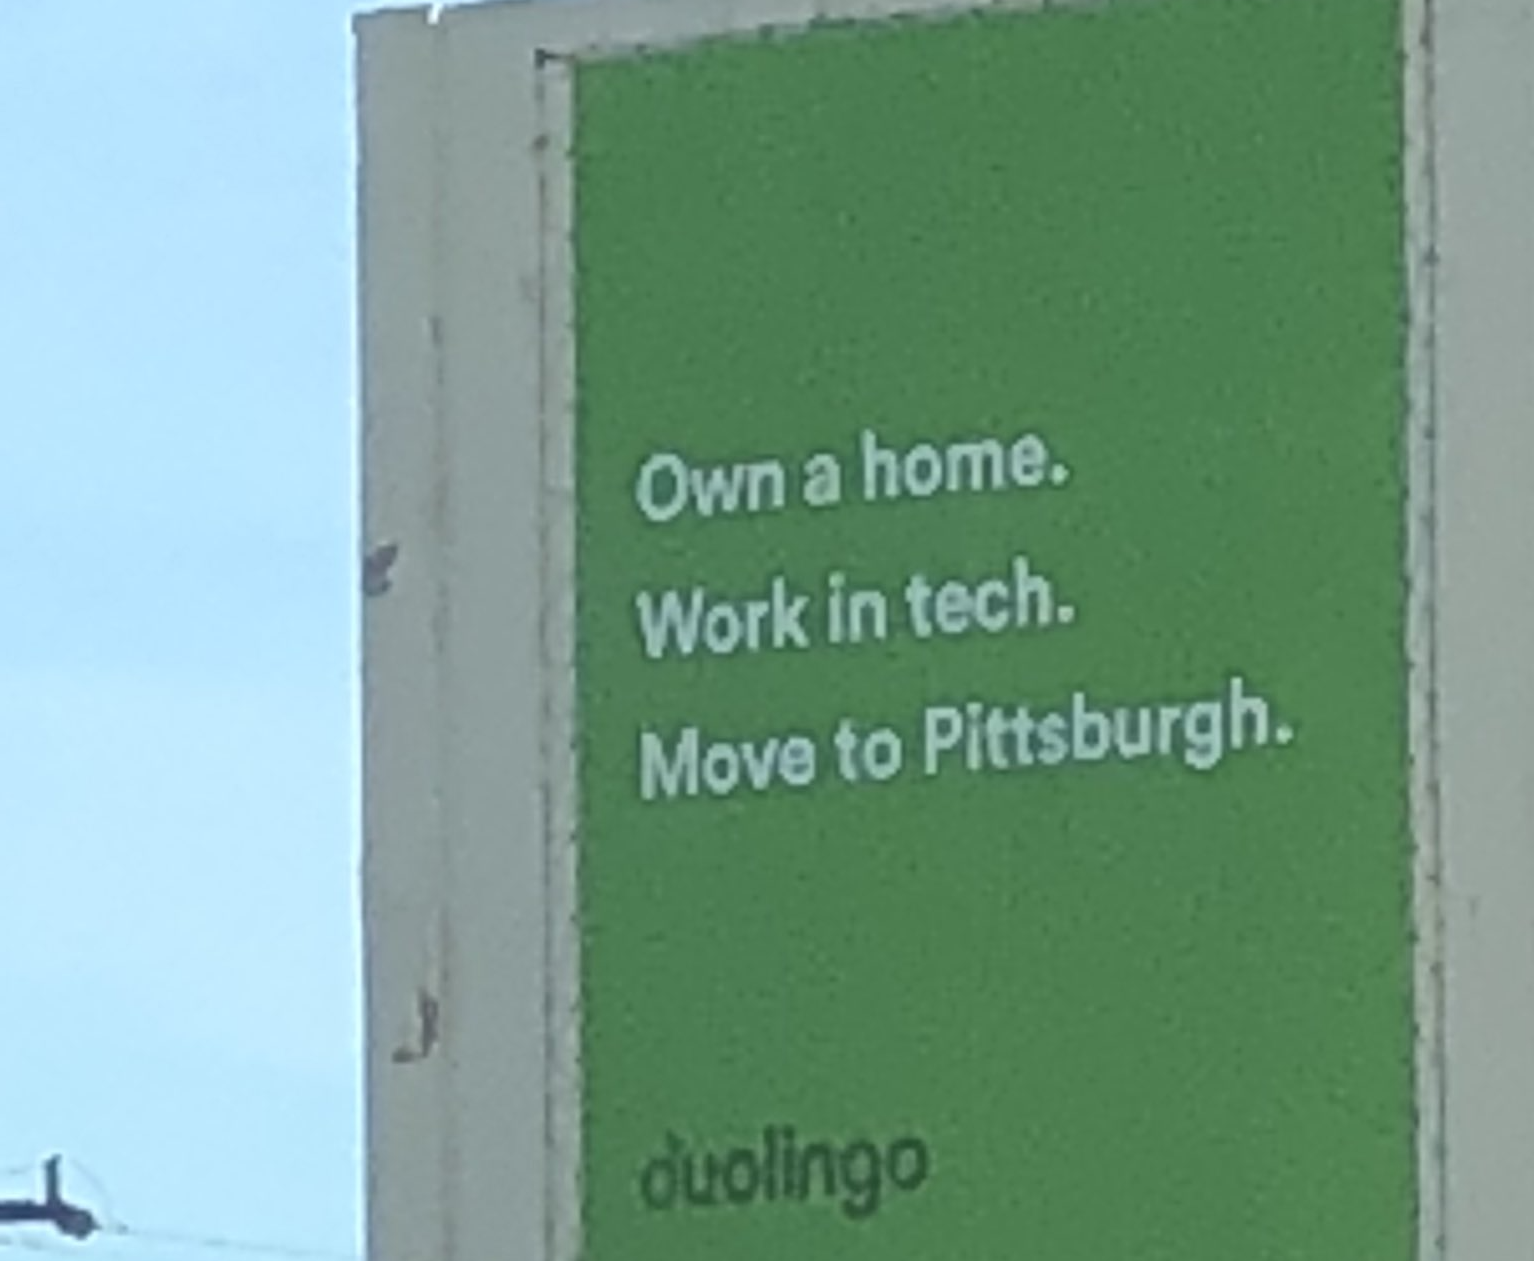 Cheeky hiring ad campaign Duolingo ran in SF